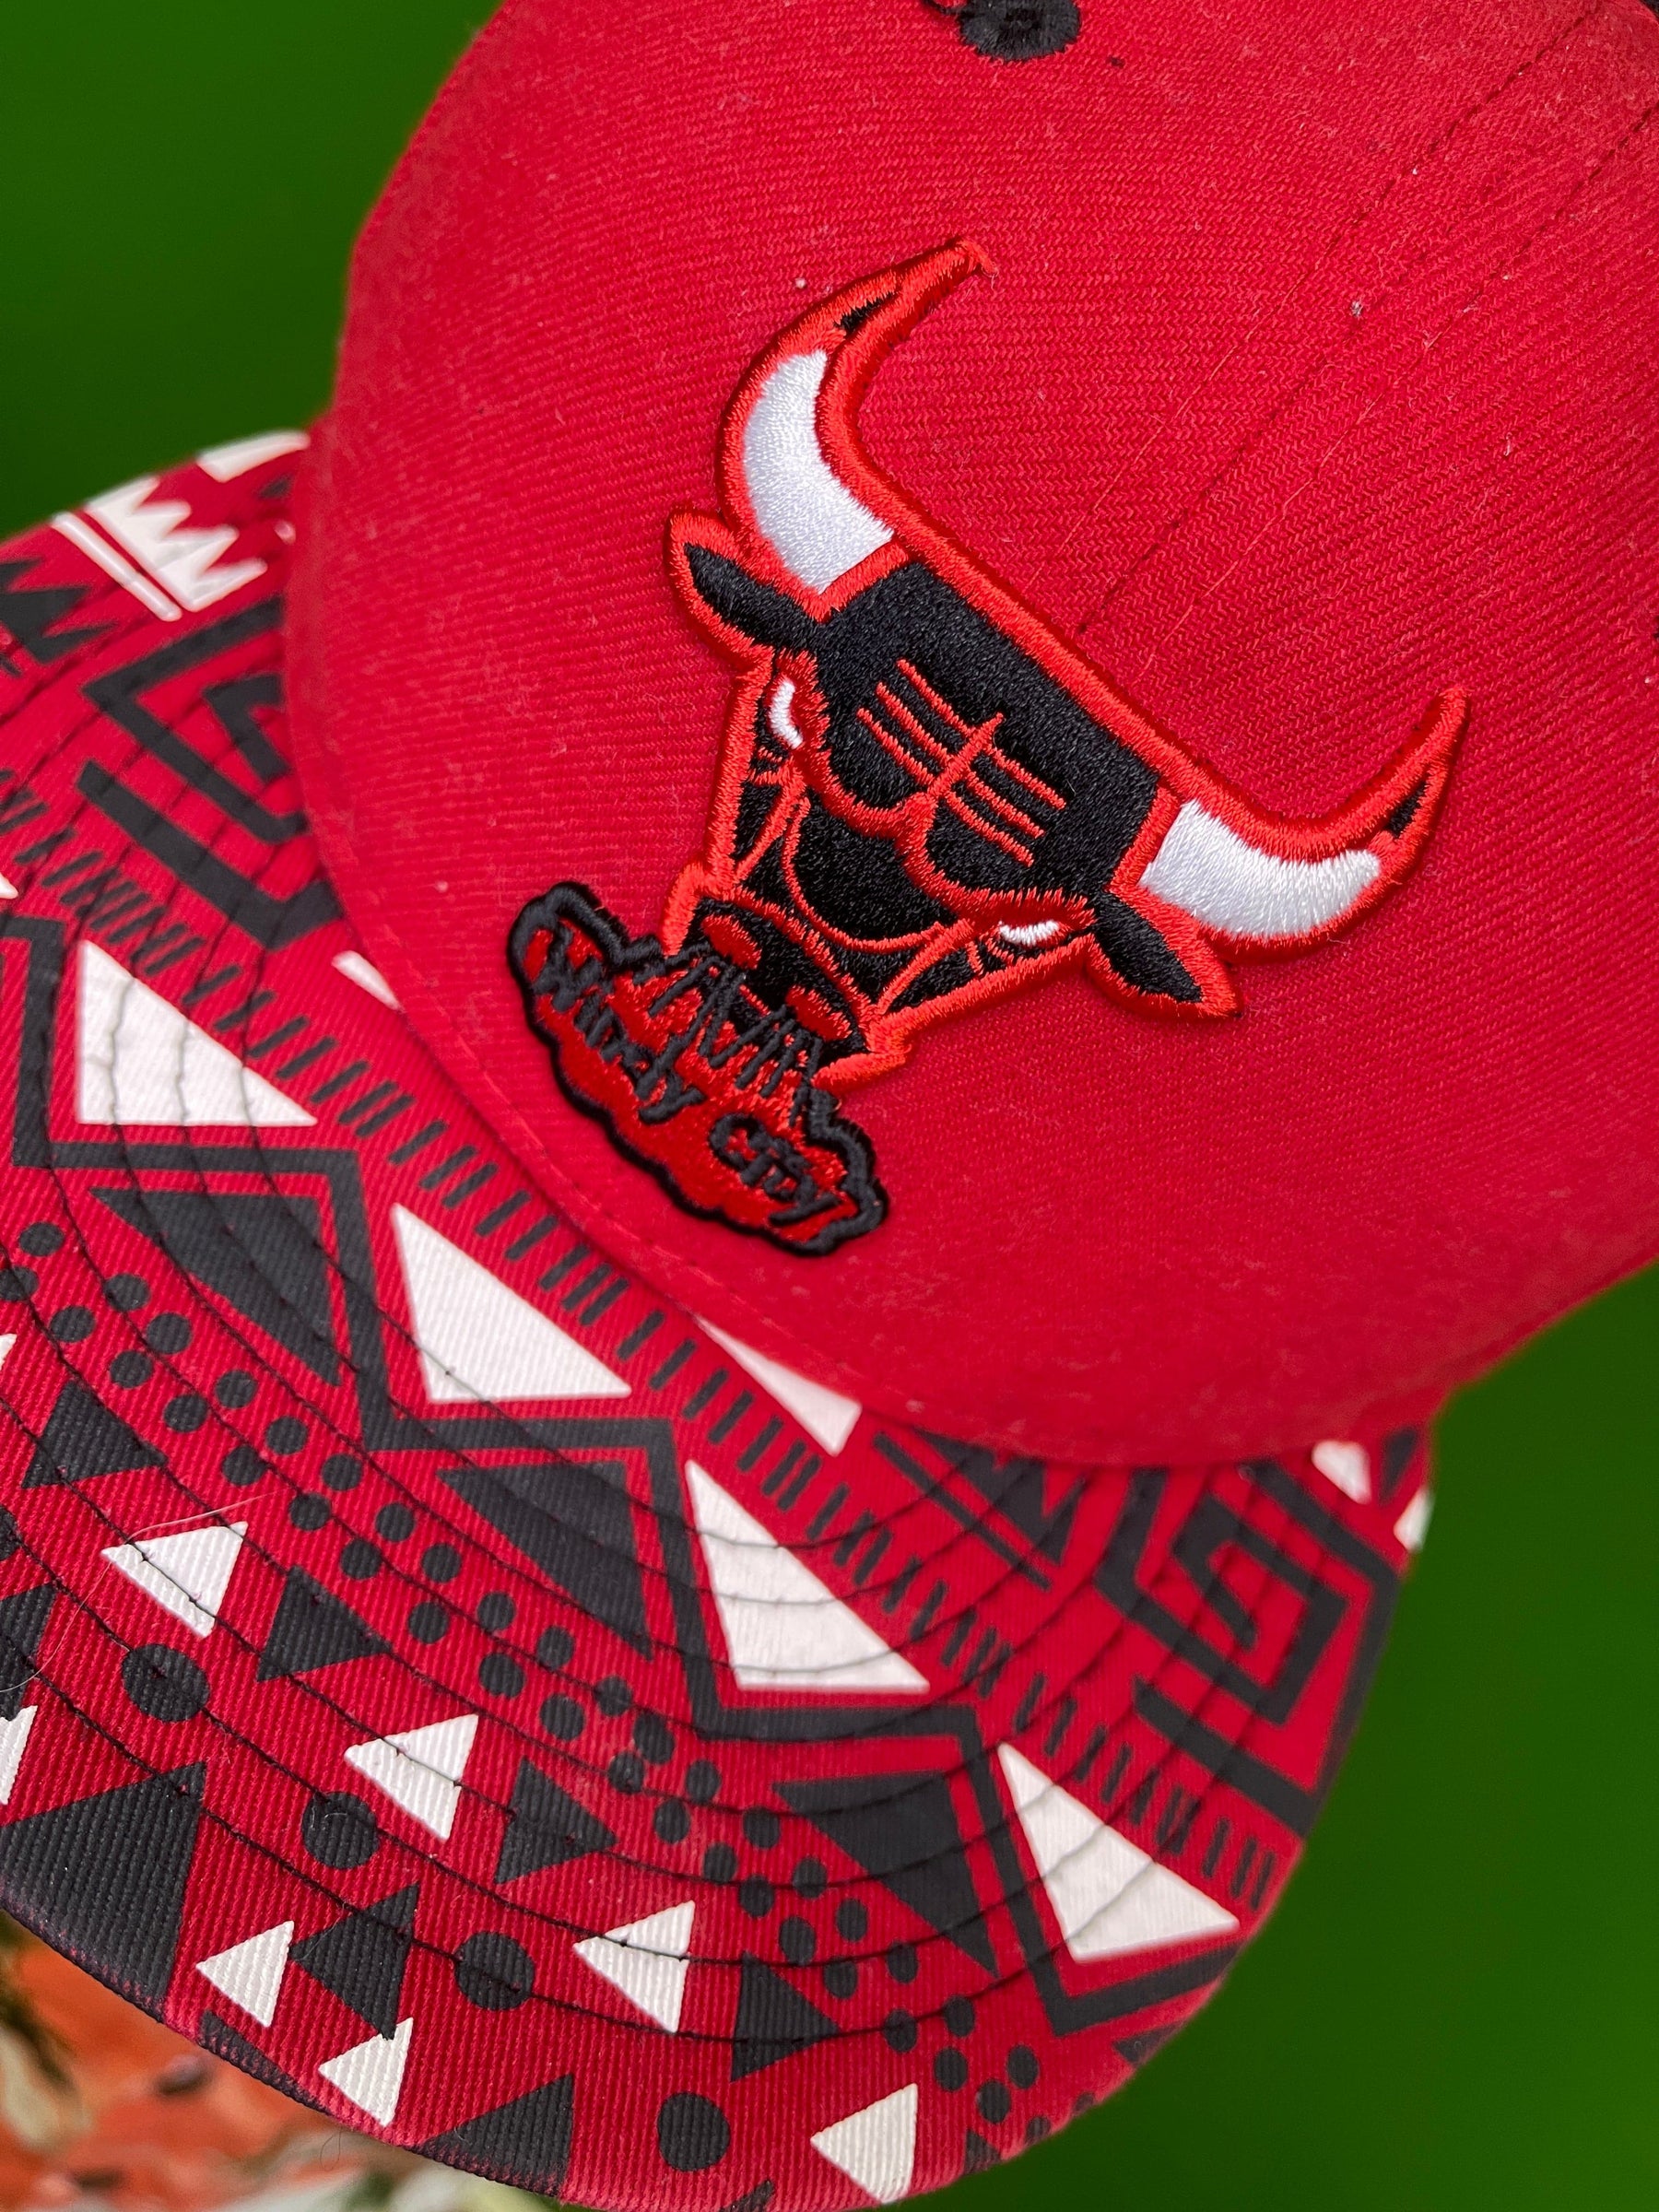 NBA Chicago Bulls New Era 9FIFTY Hat/Cap Snapback OSFM`